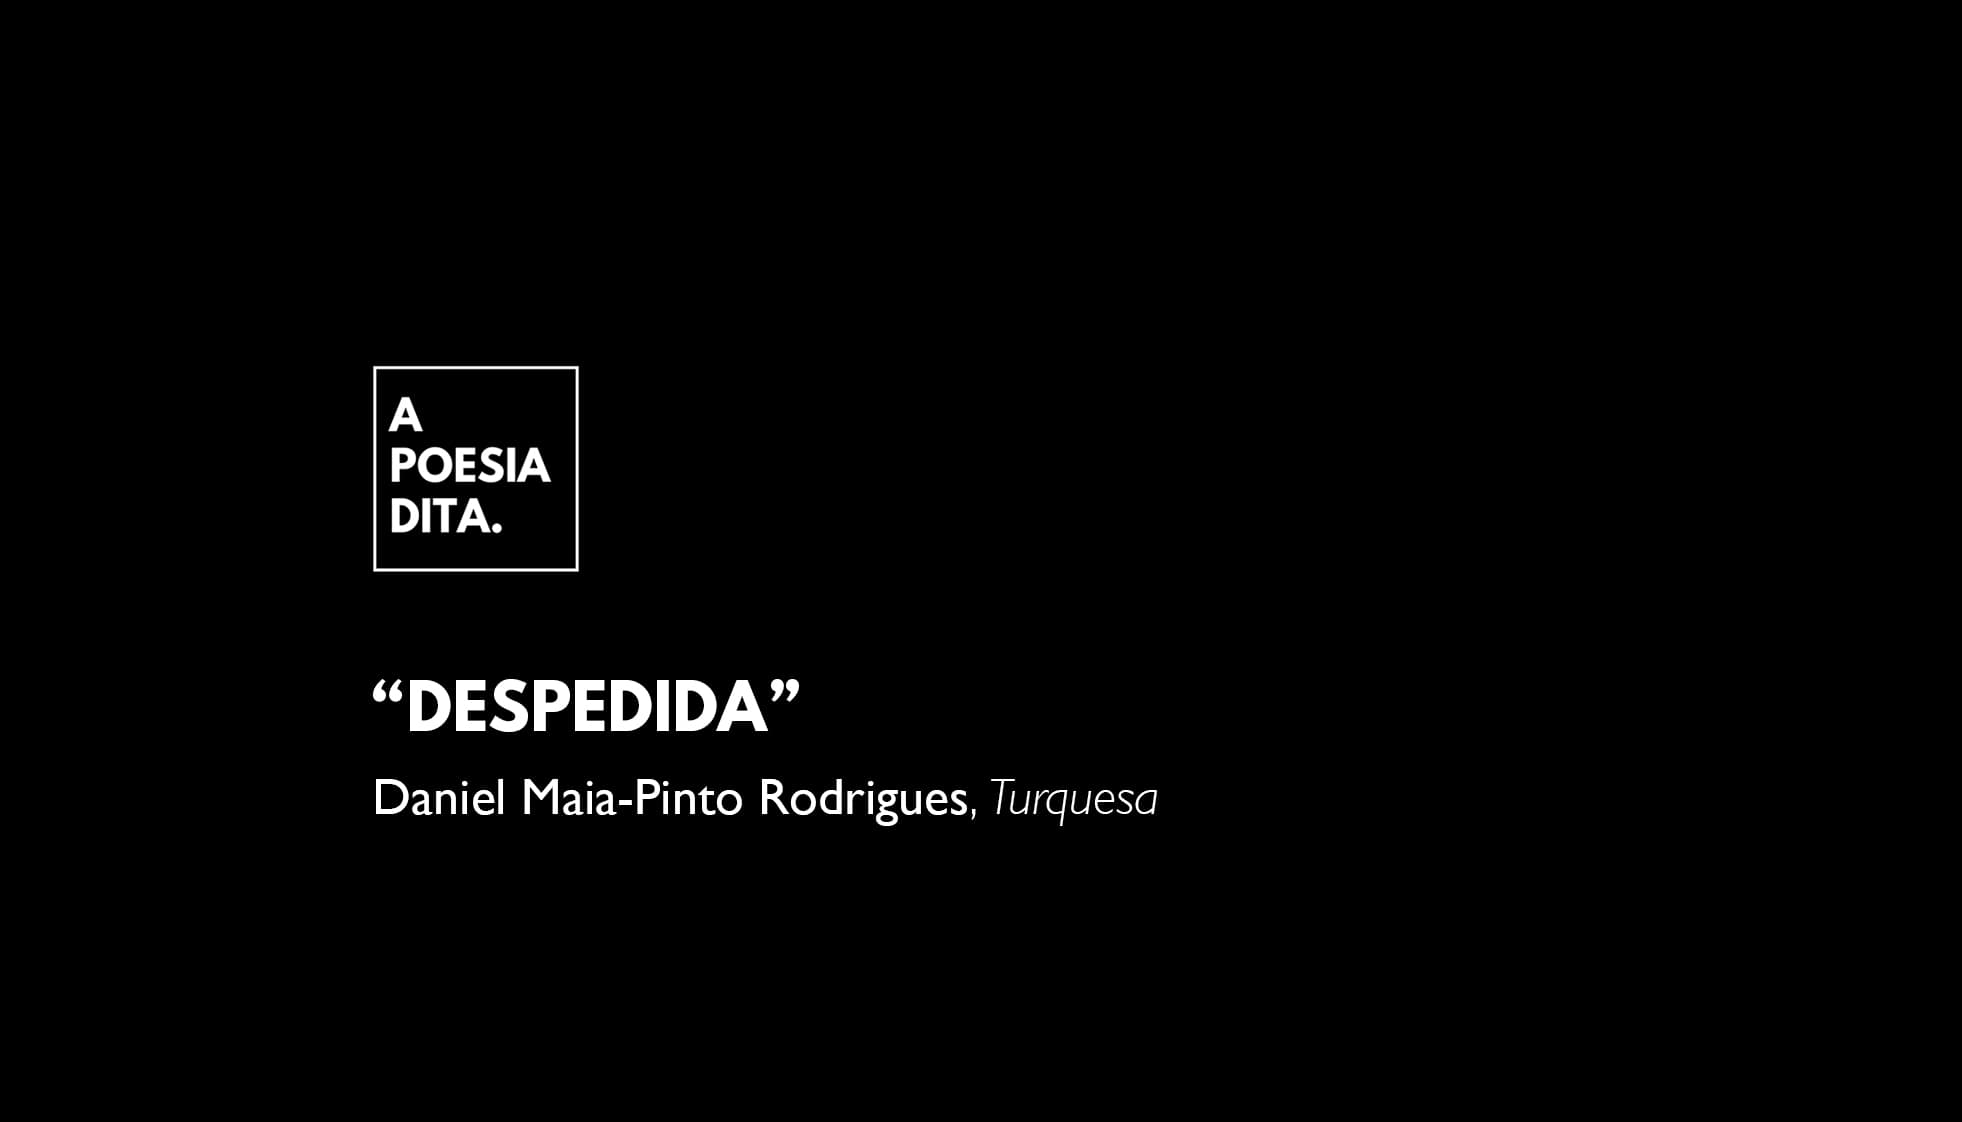 Despedida, um poema de Daniel Maia‑Pinto Rodrigues, n’A Poesia Dita.